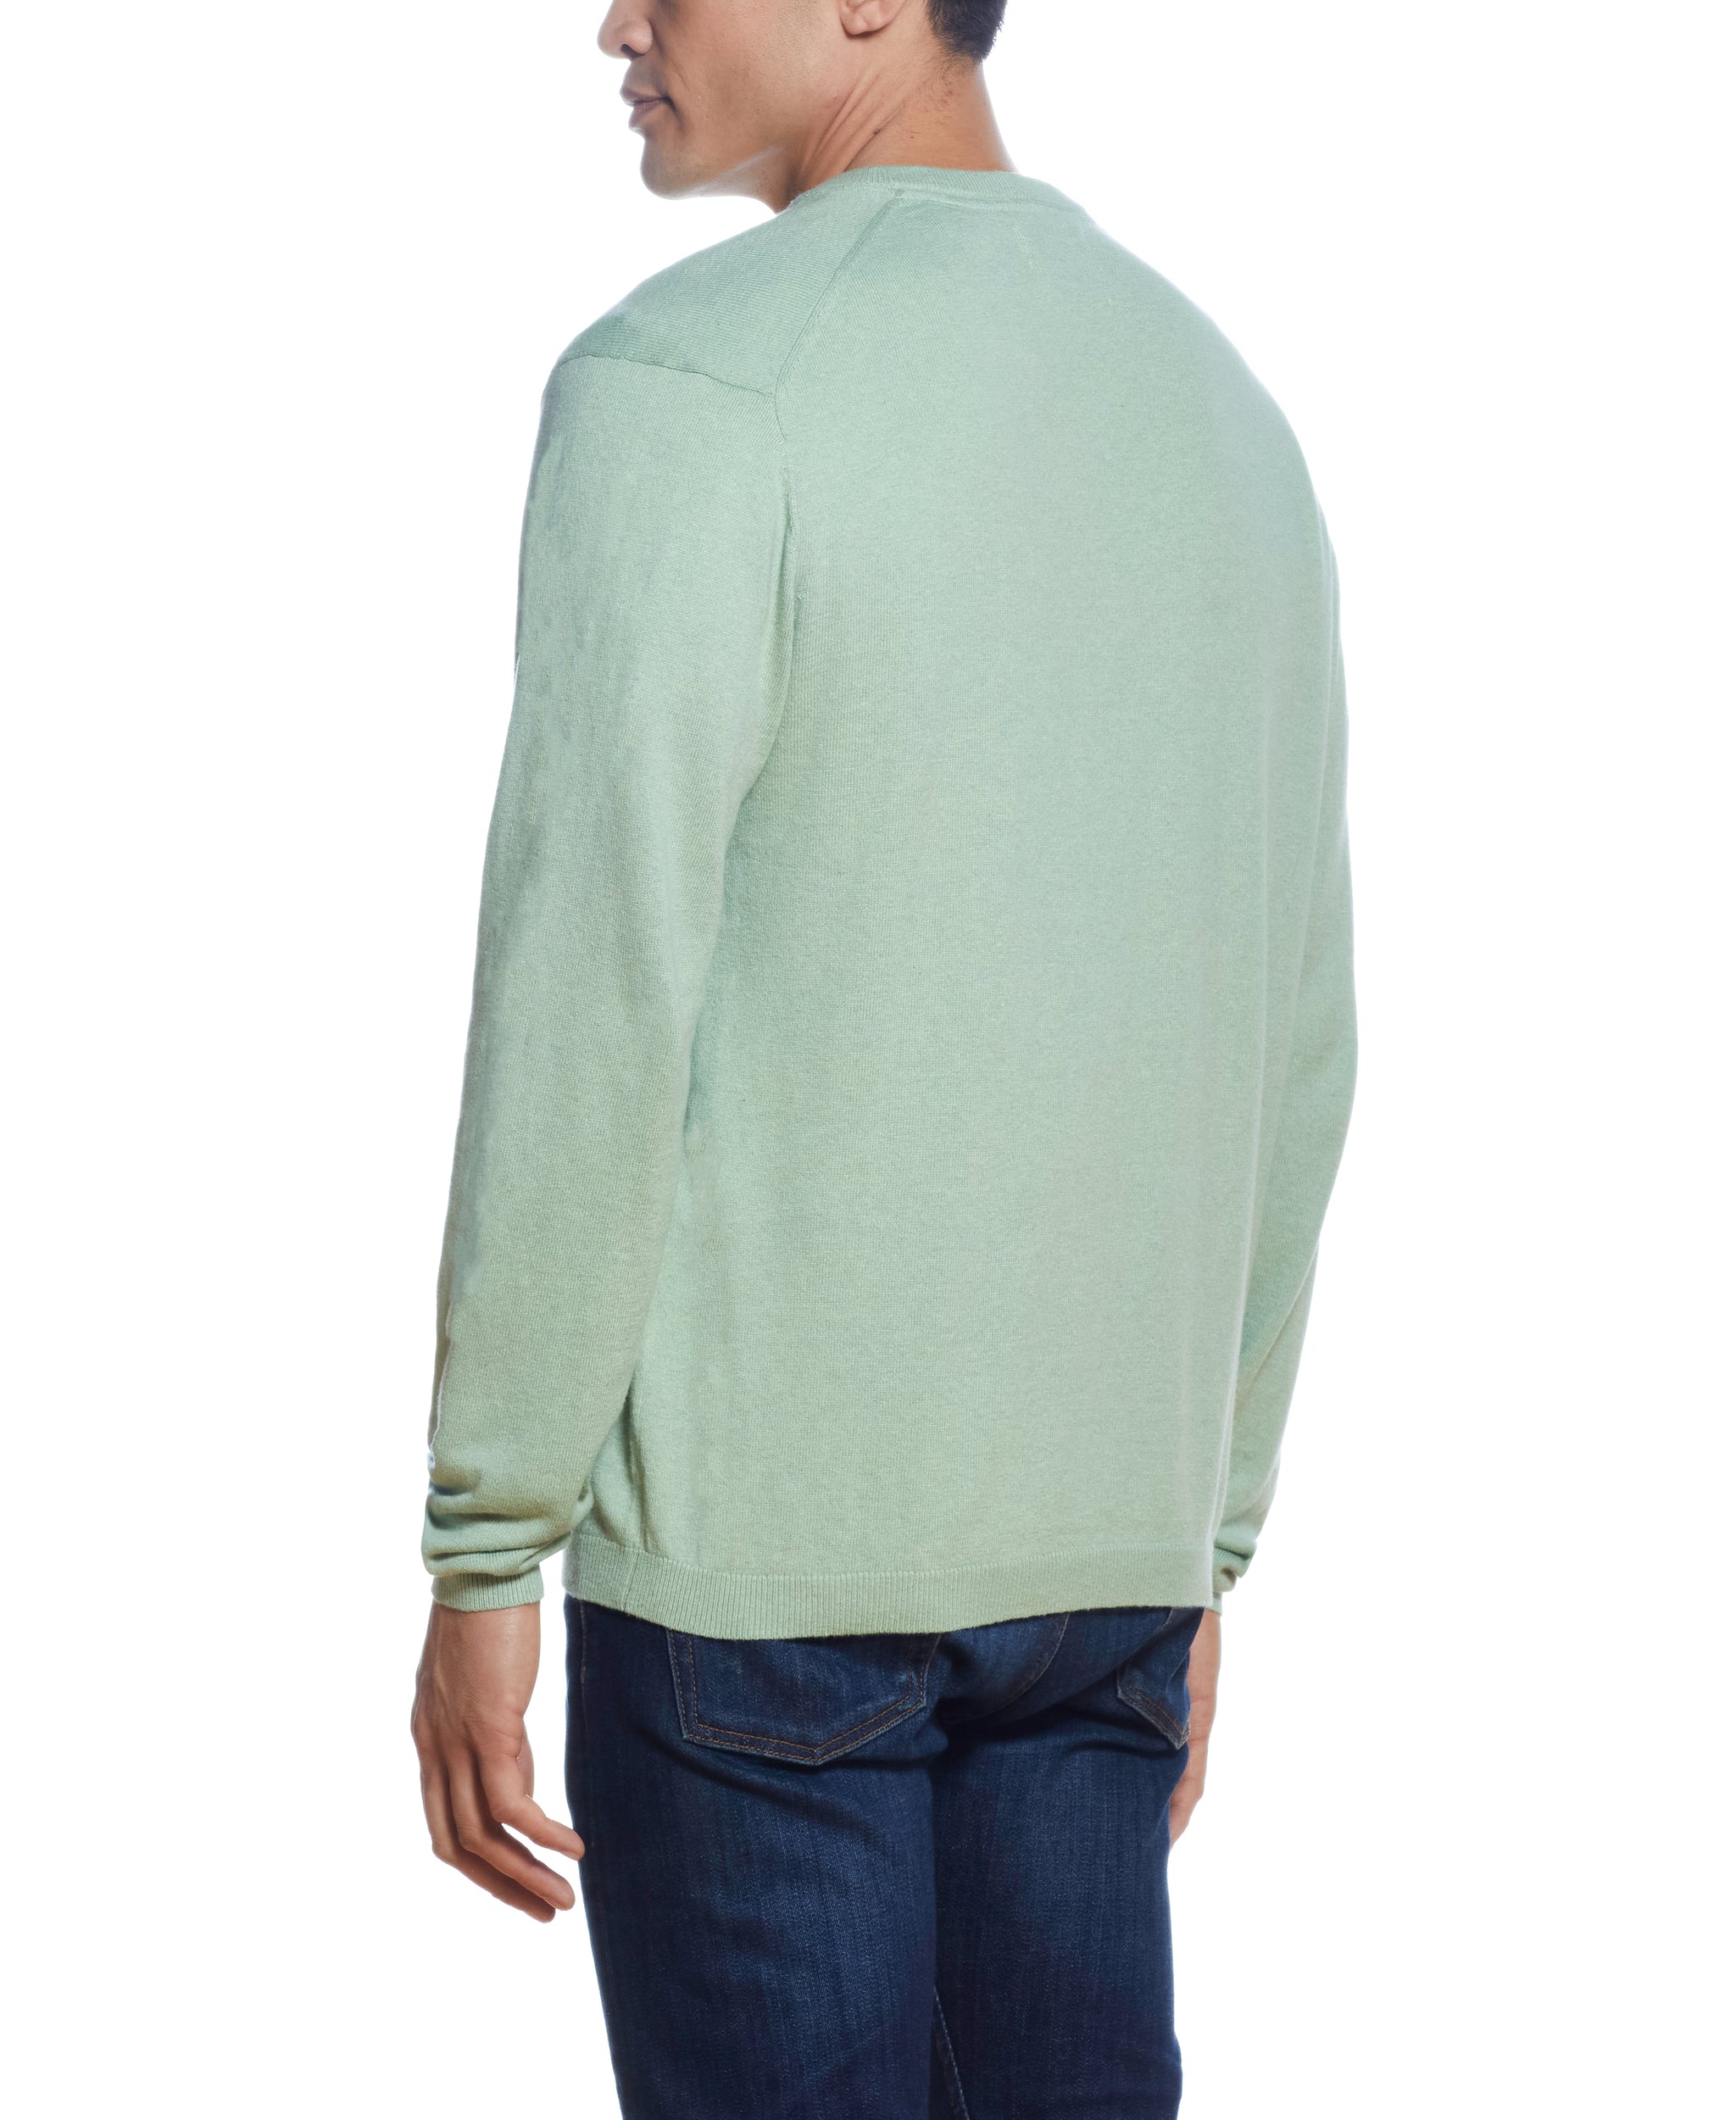 Cotton Cashmere V Neck Sweater in Light Olive – Weatherproof